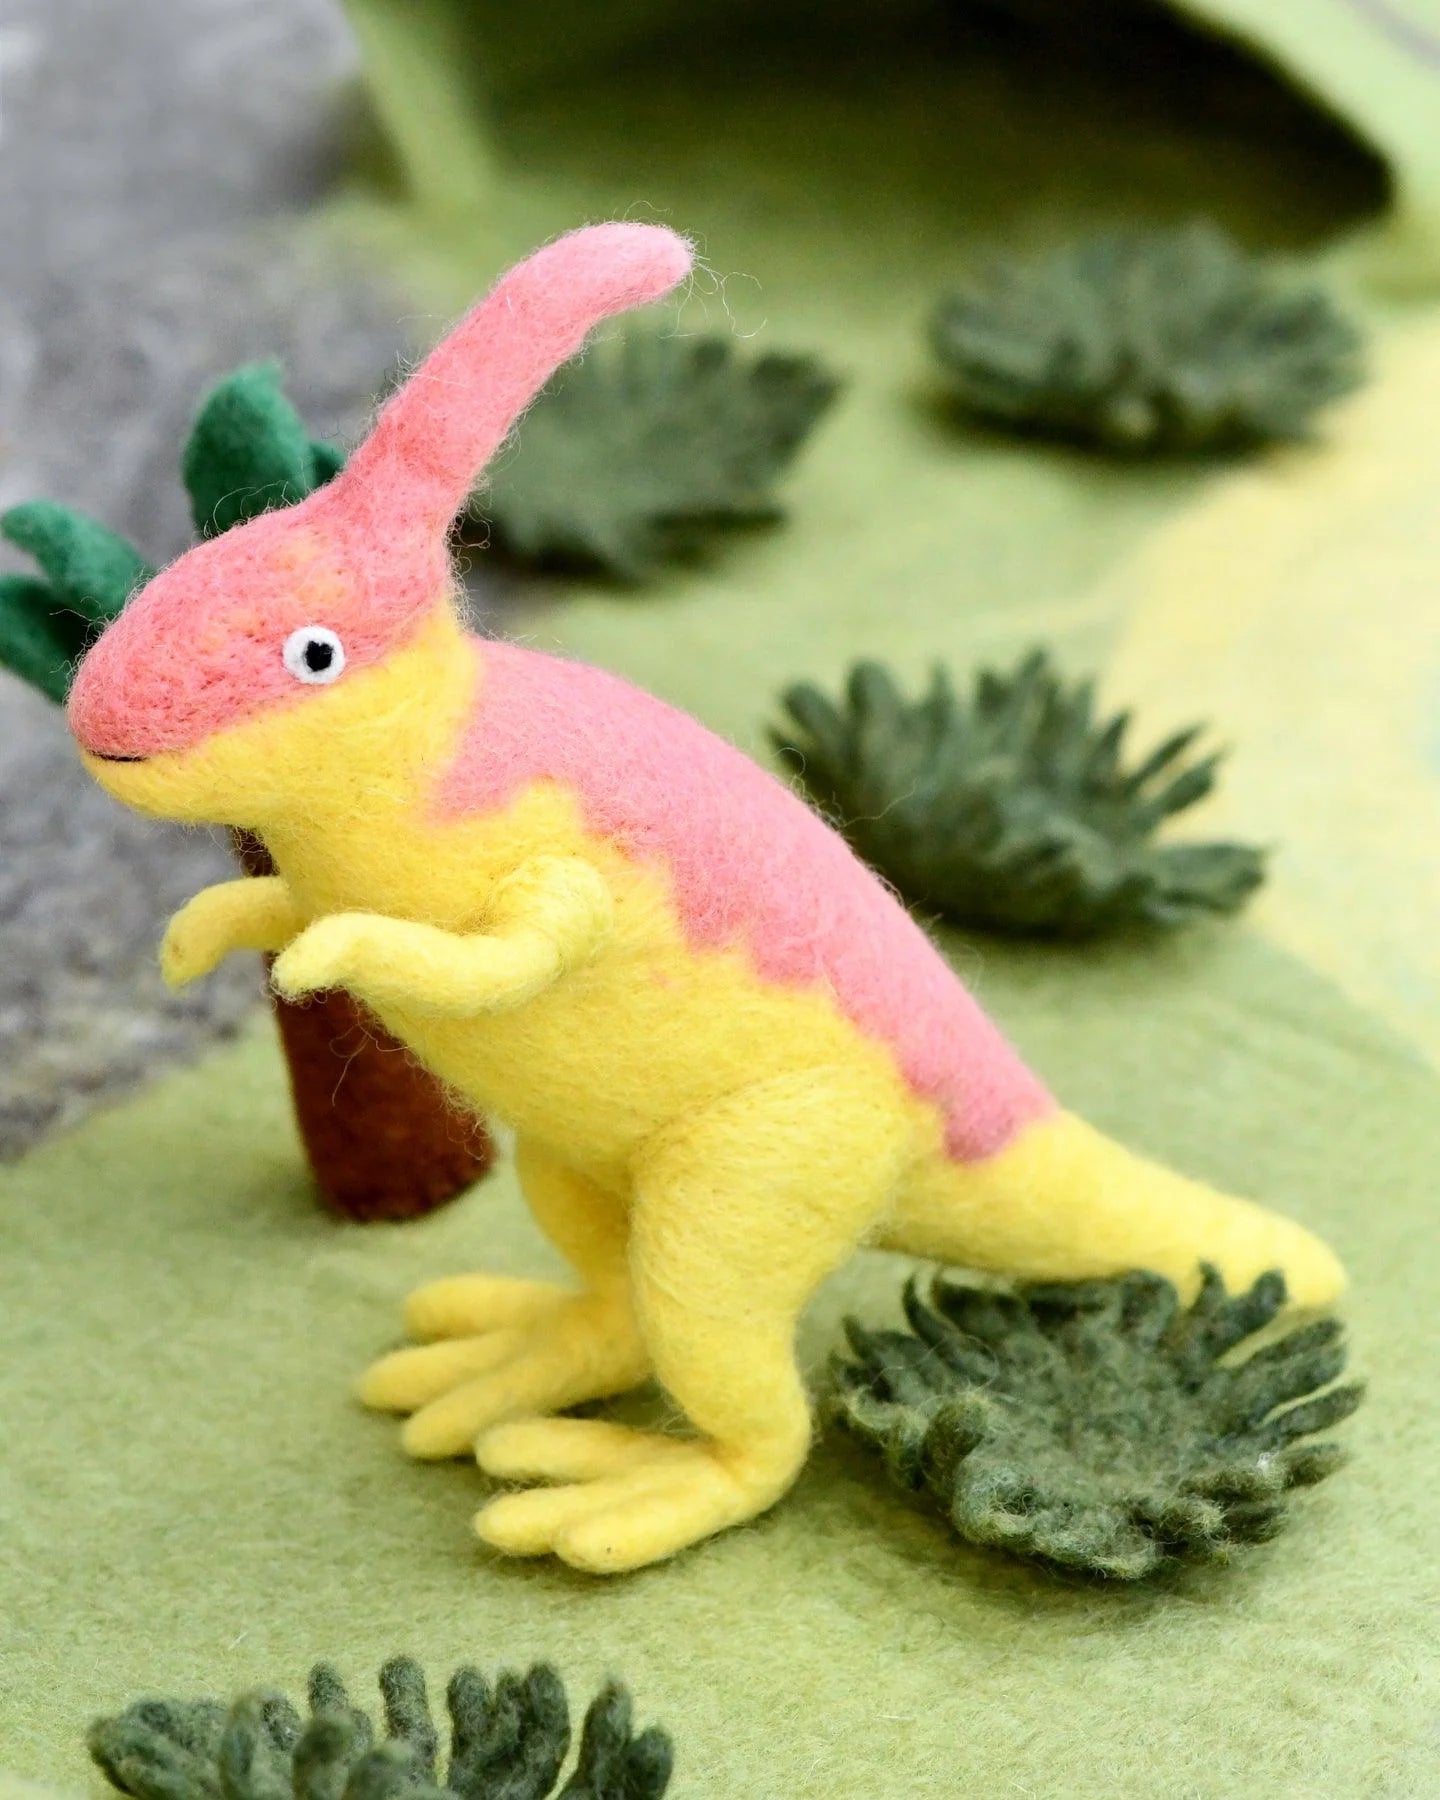 Tara Treasures Felt Dinosaur Toys